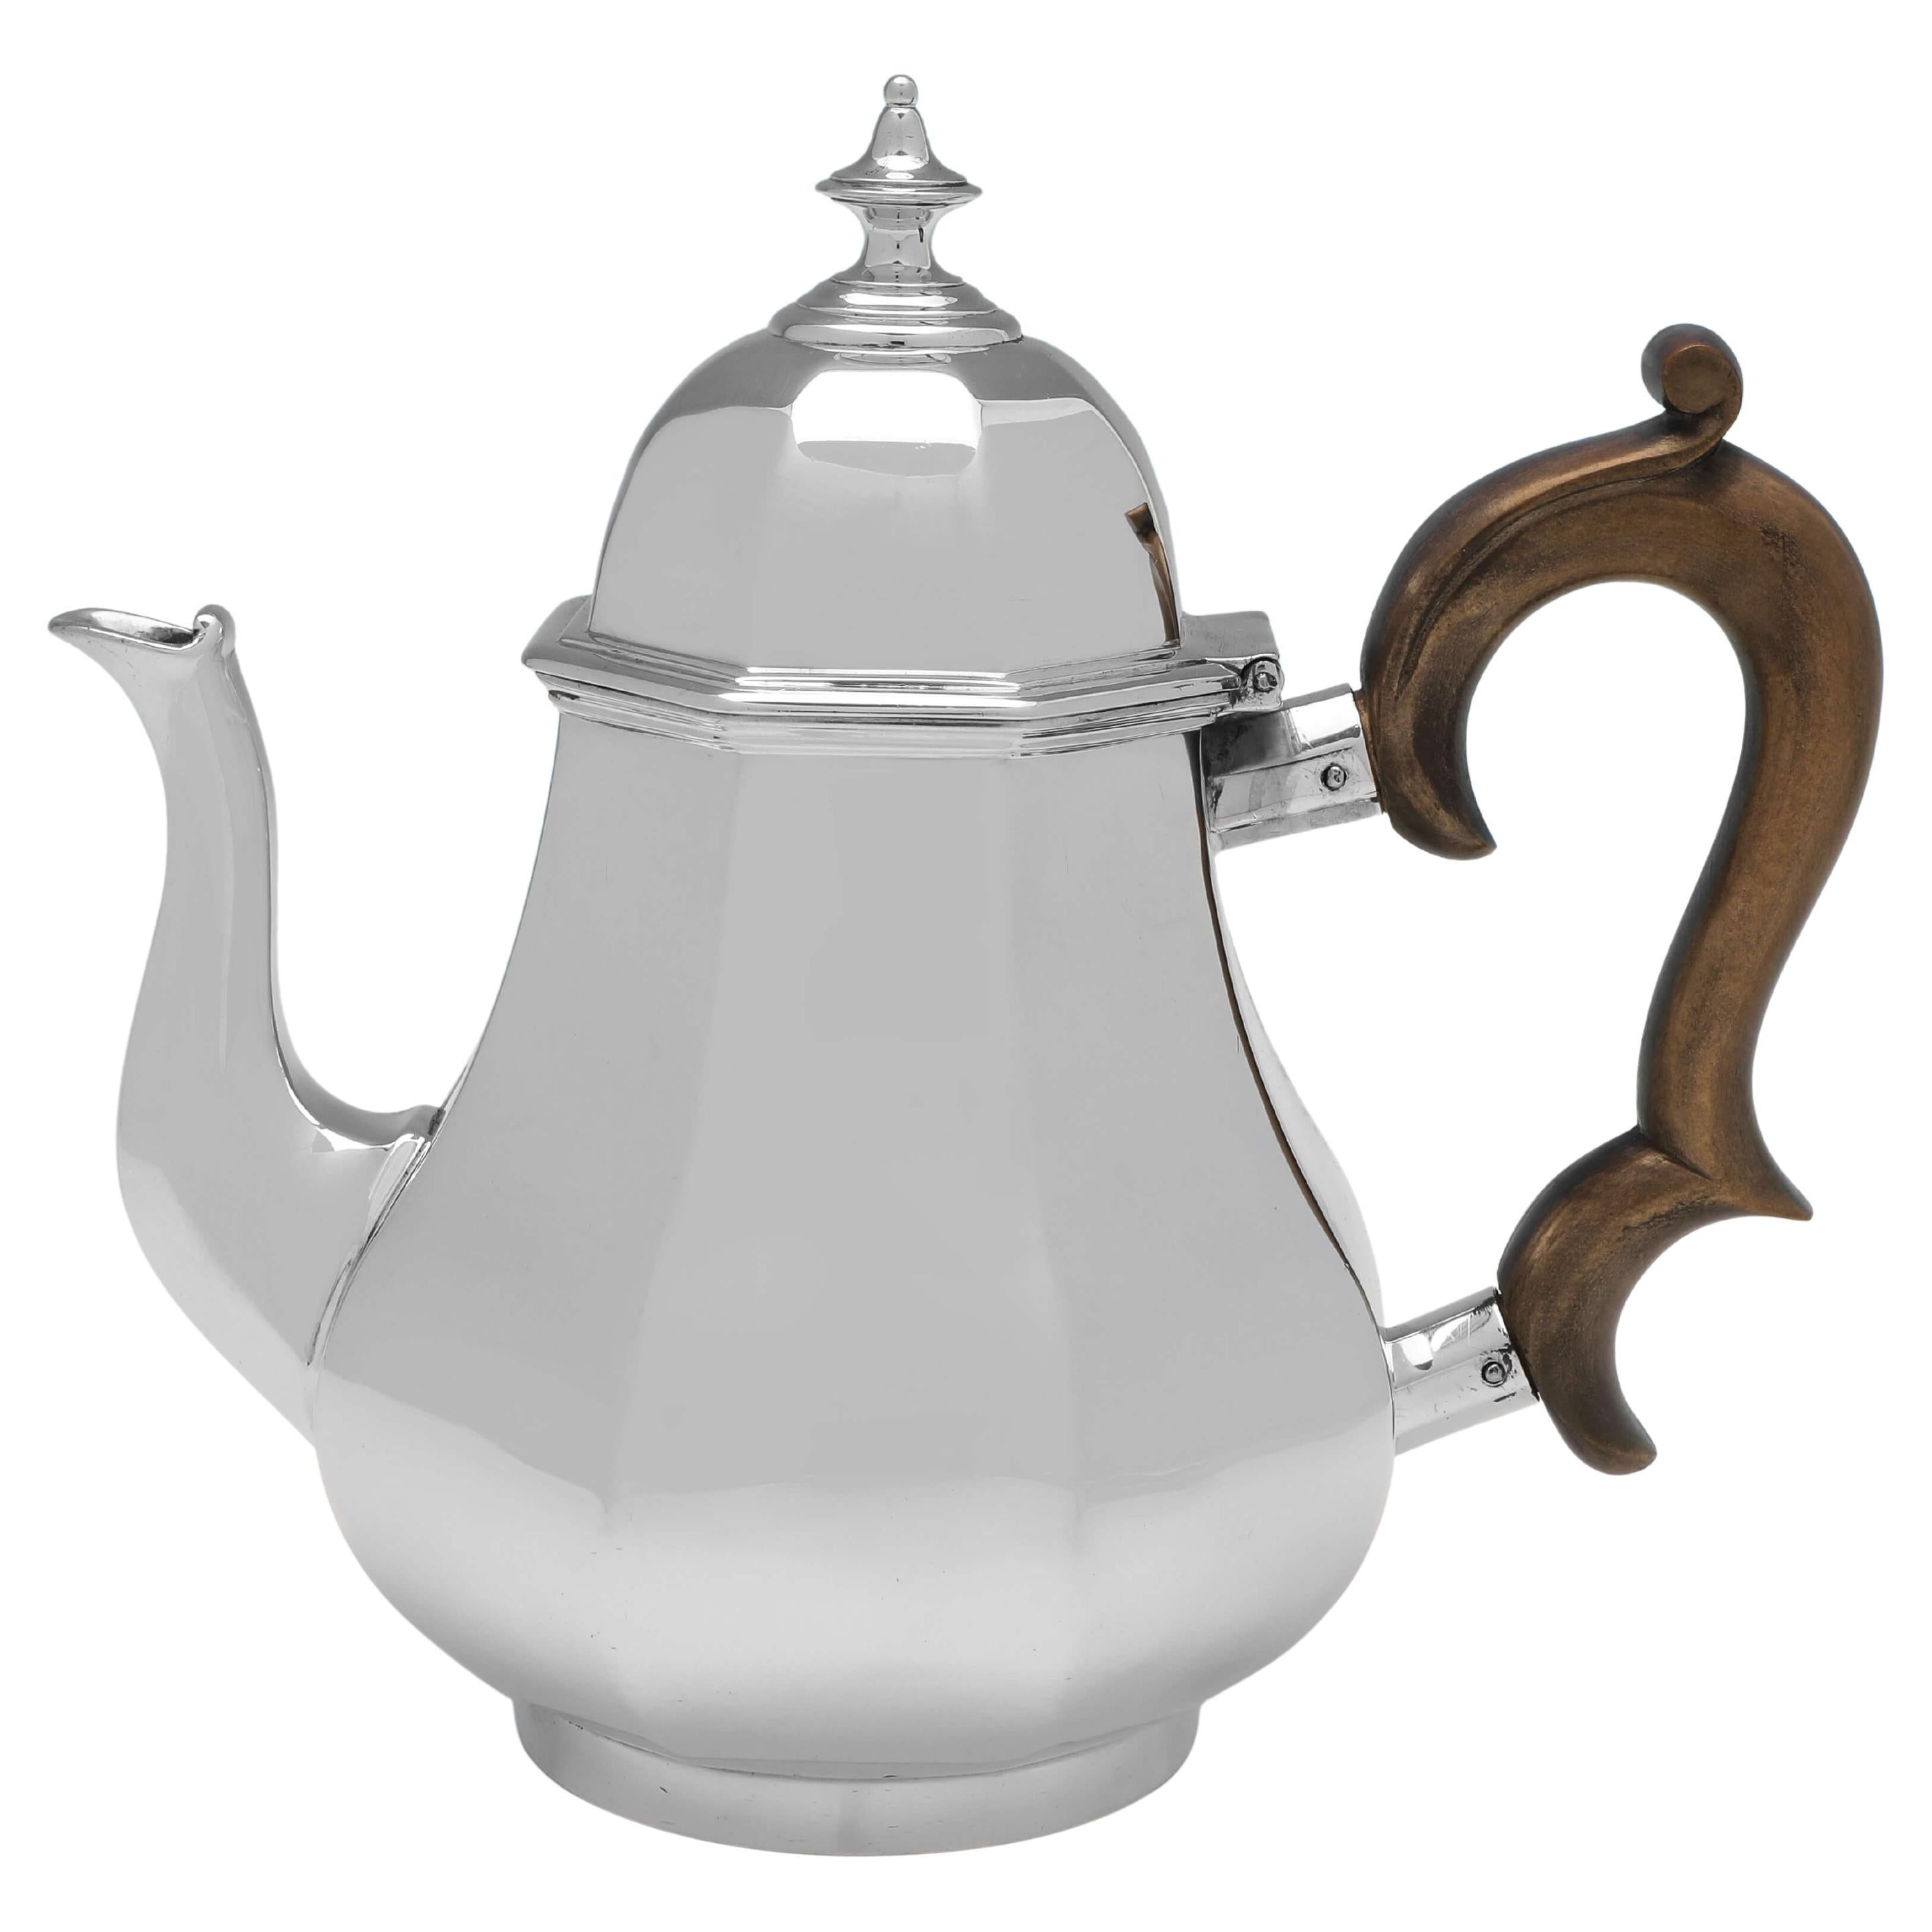 Octagonal Antique Sterling Silver Teapot, London 1911 by Garrard & Co.